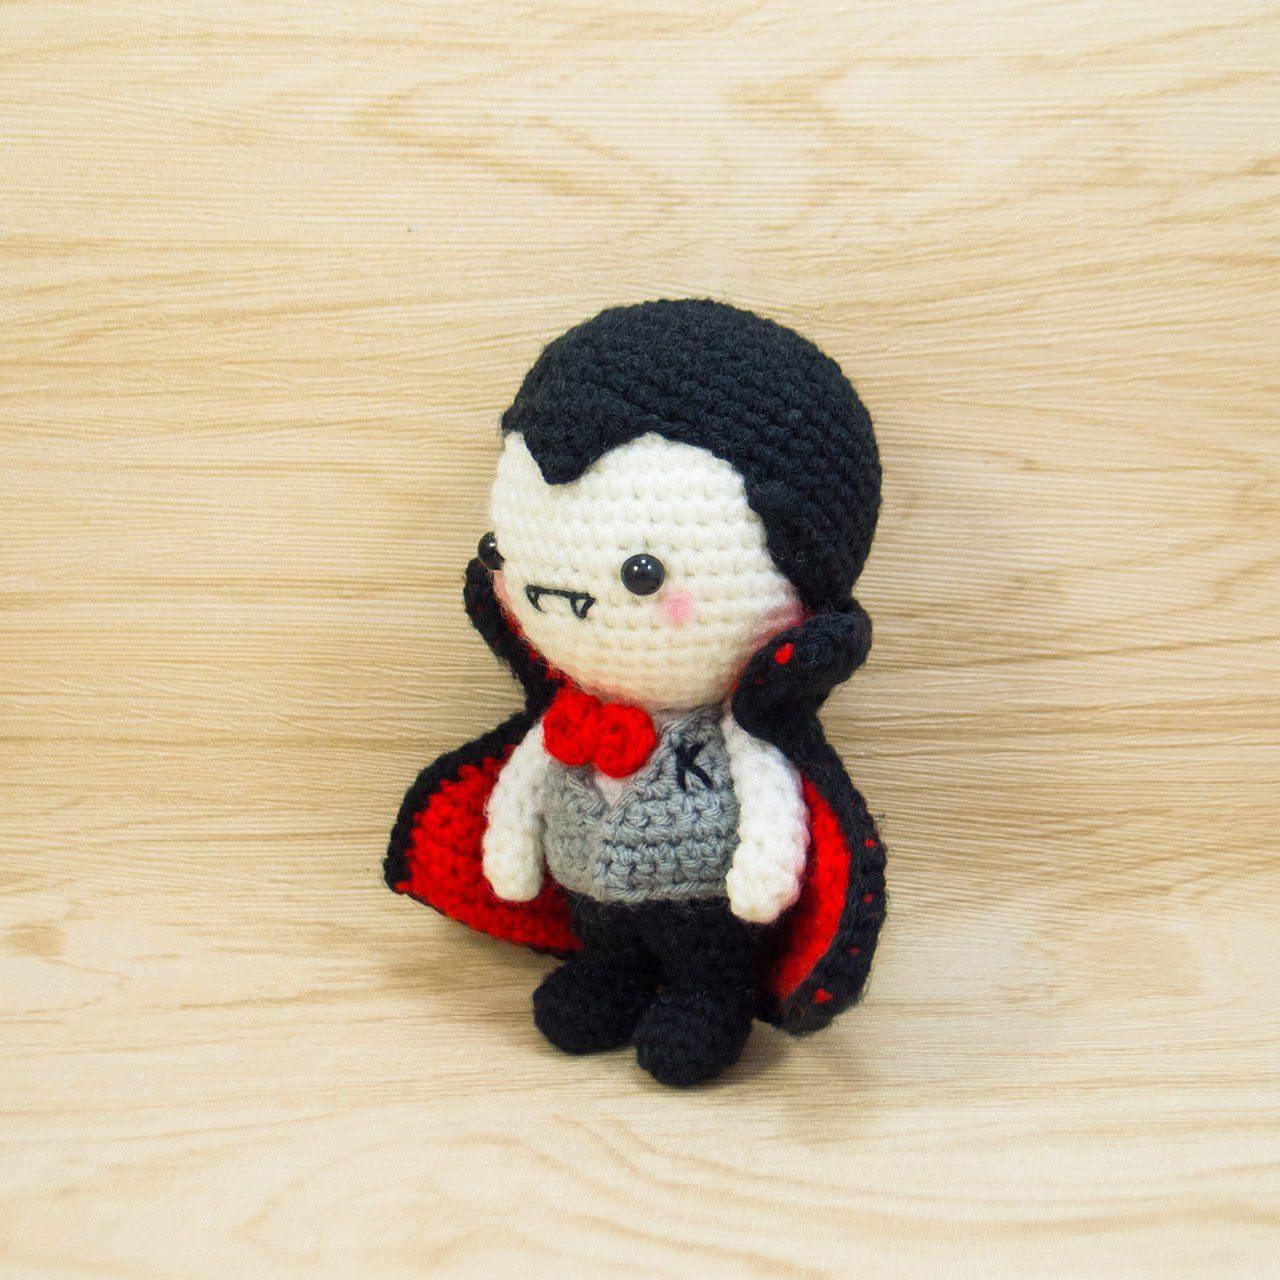 Mr K the Vampire Crochet Toy